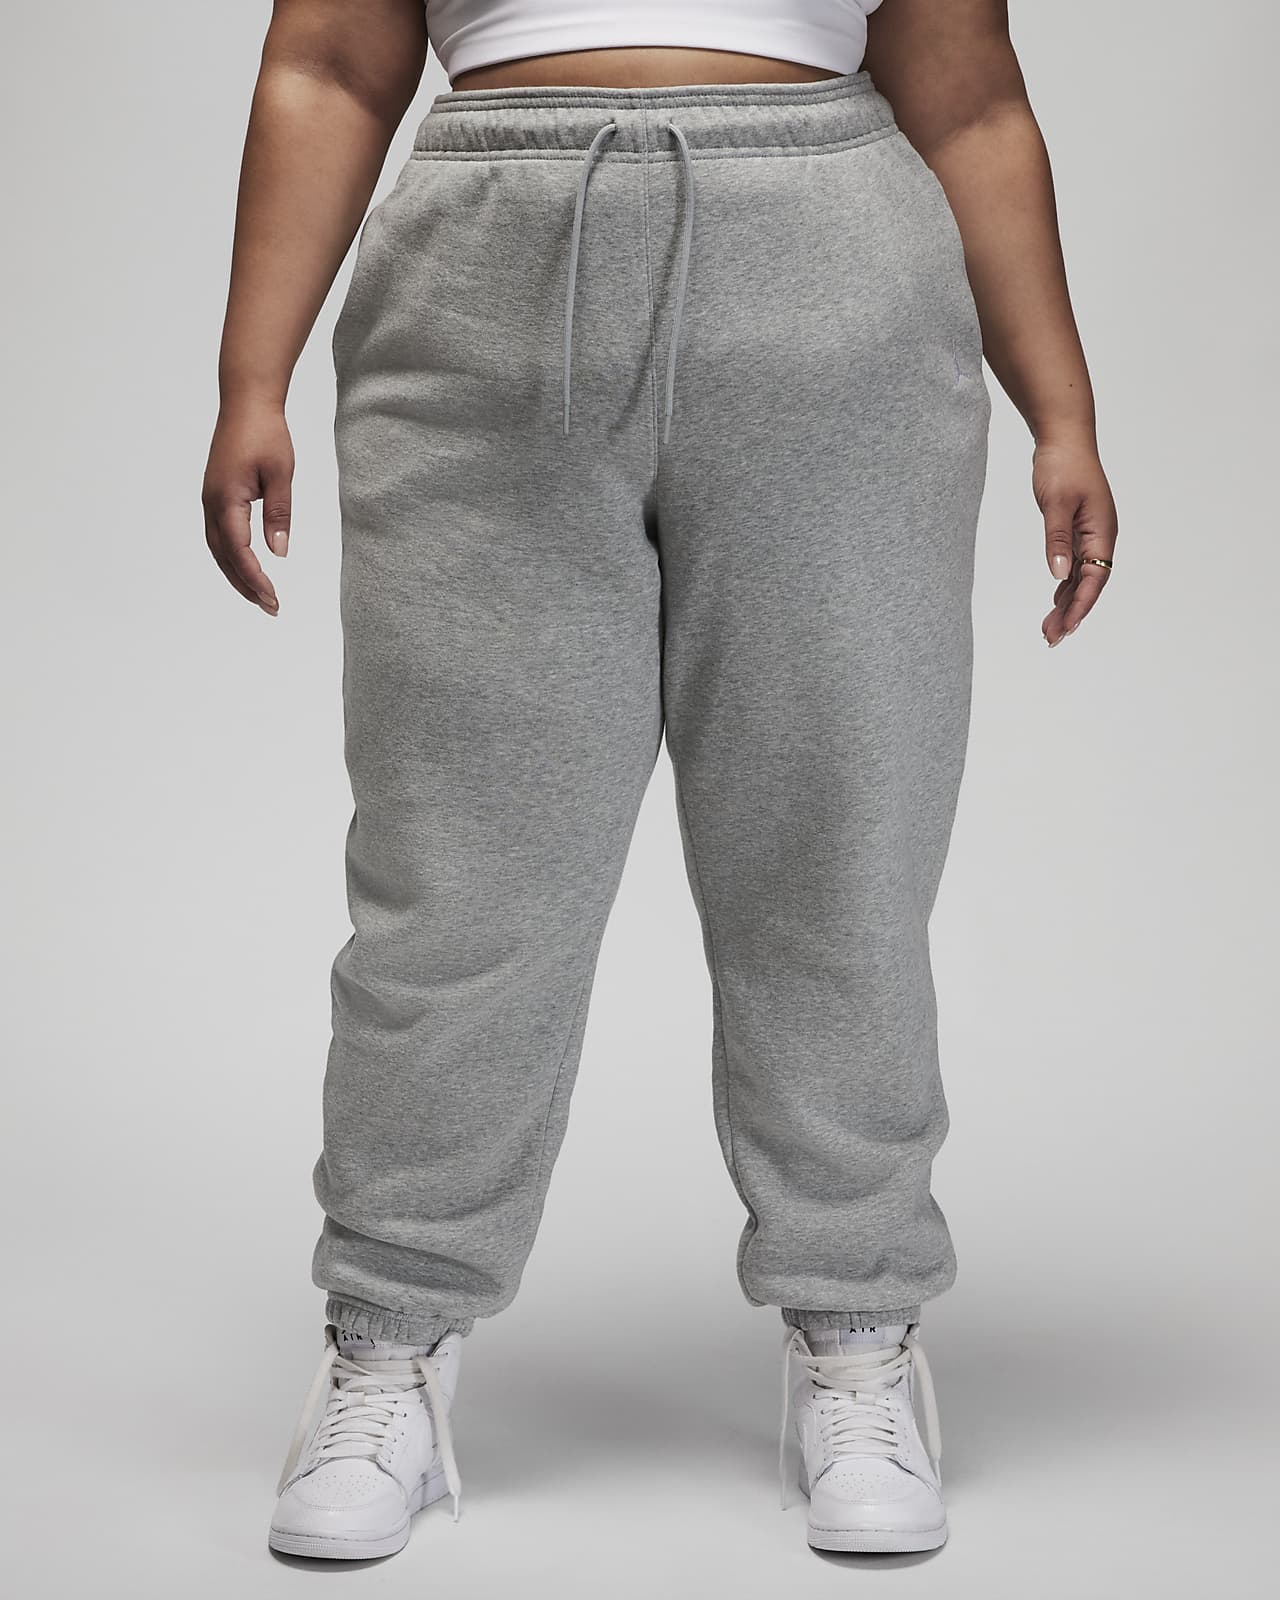 Cyberplads Problemer plast Jordan Brooklyn Fleece-bukser til kvinder (plus size). Nike DK